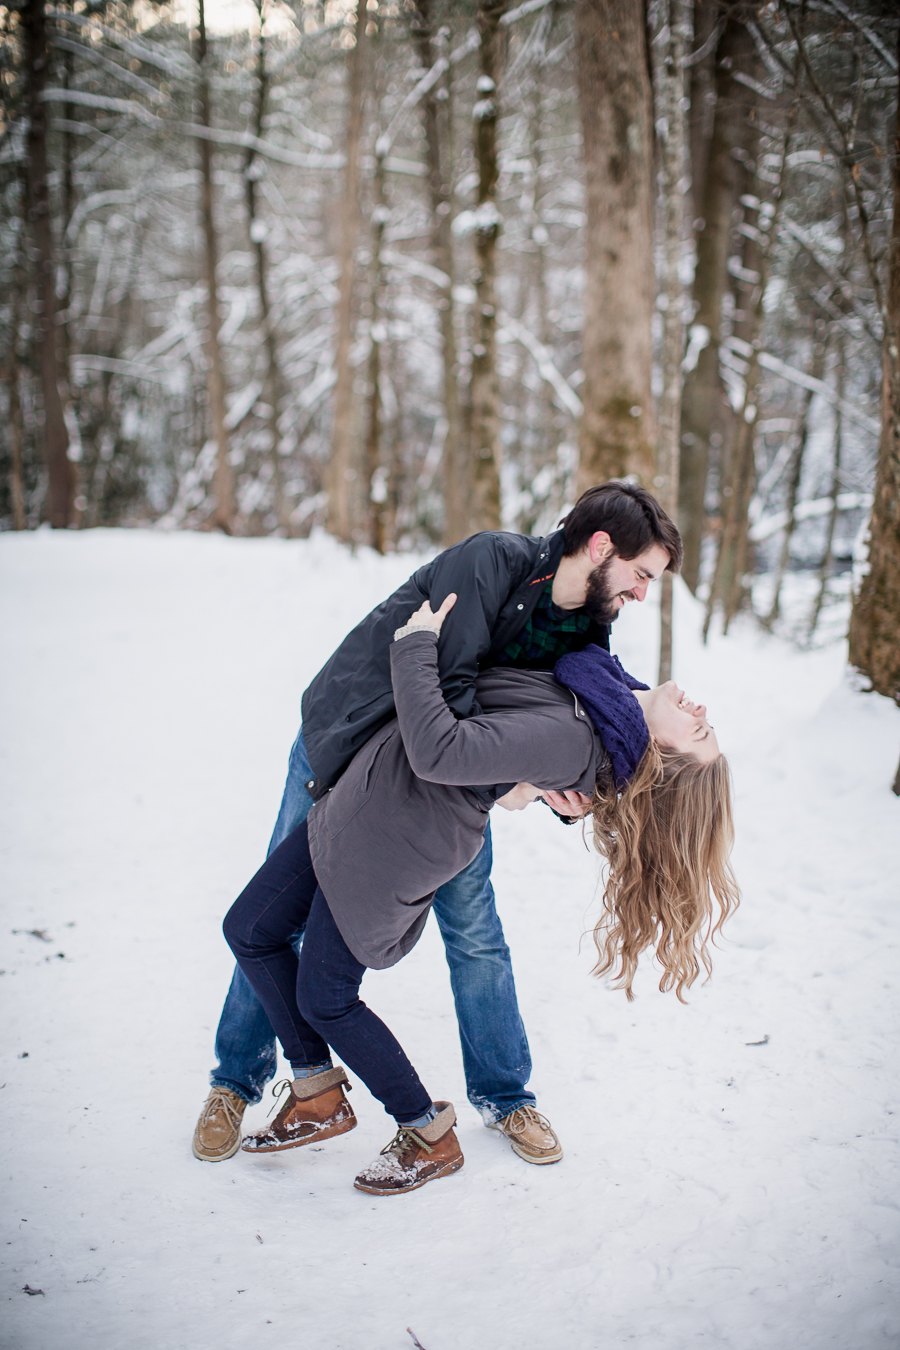 He dips her snowy Smoky Mountain photo.